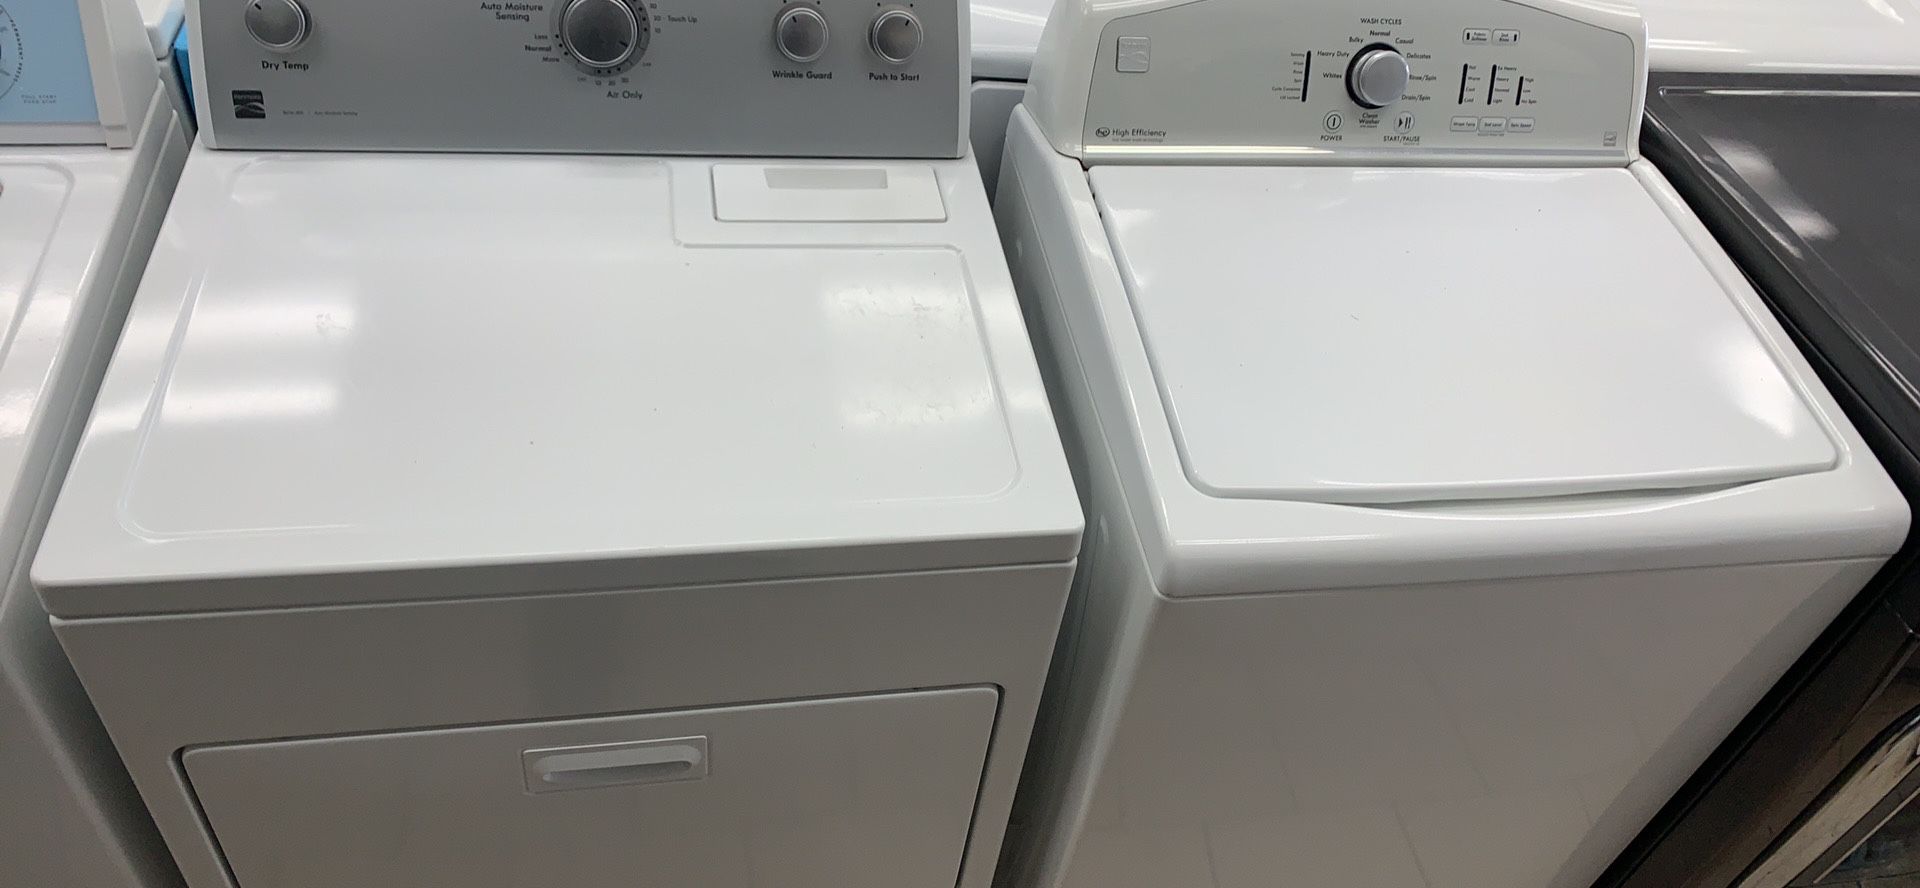 Kenmore washer dryer set